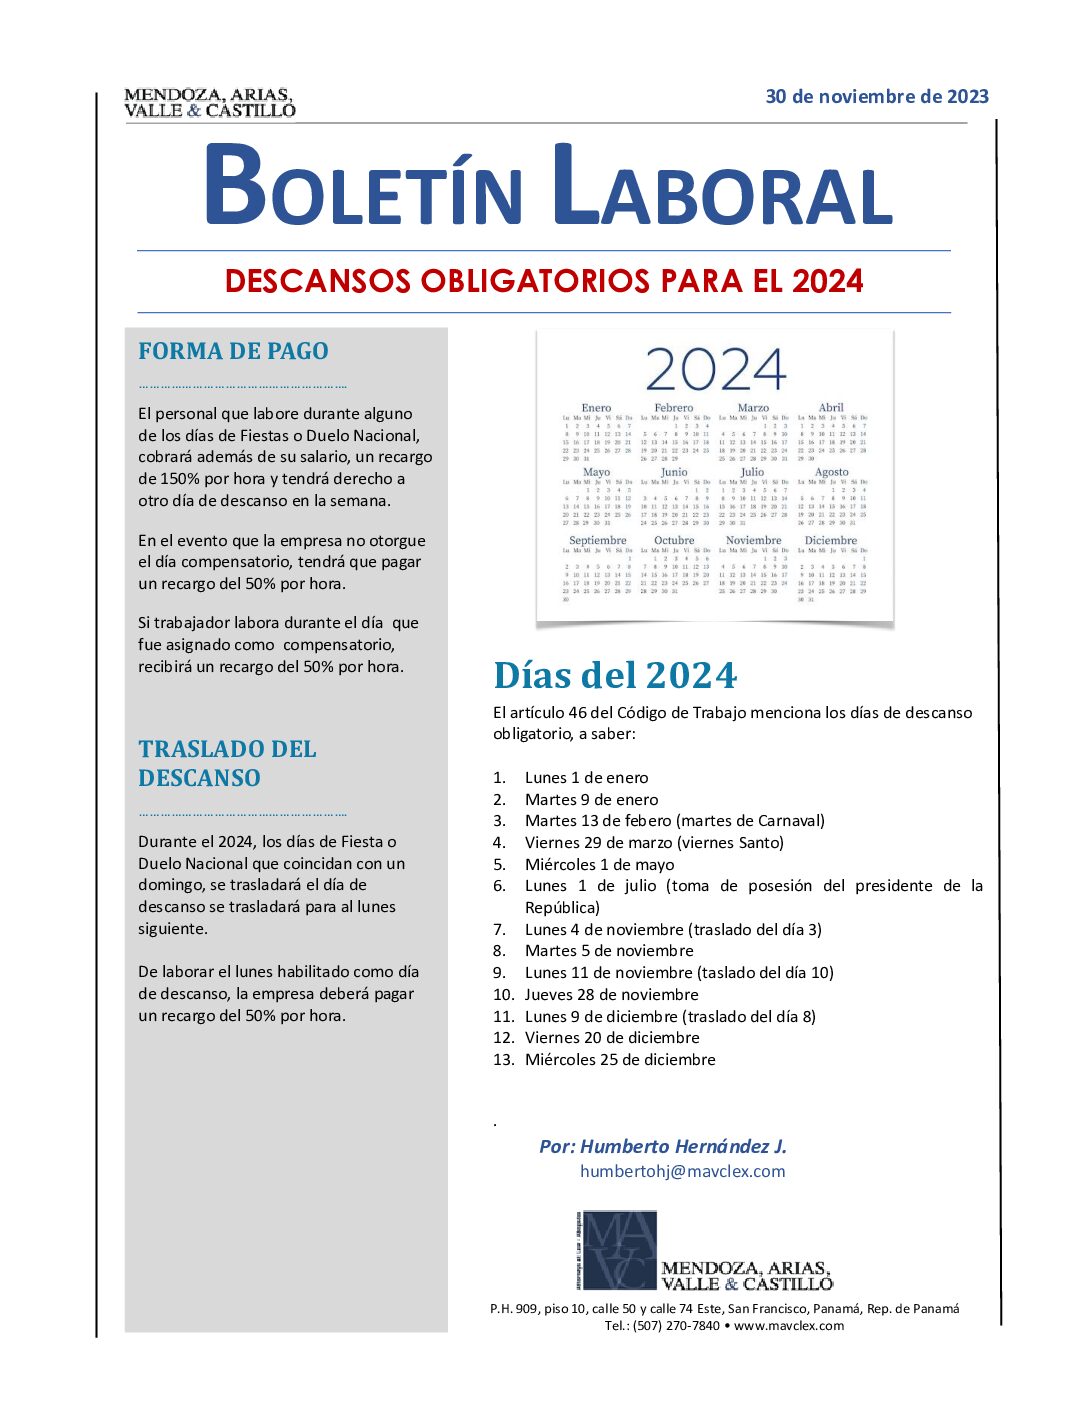 BOLETIN LABORAL DESCANSOS 2024